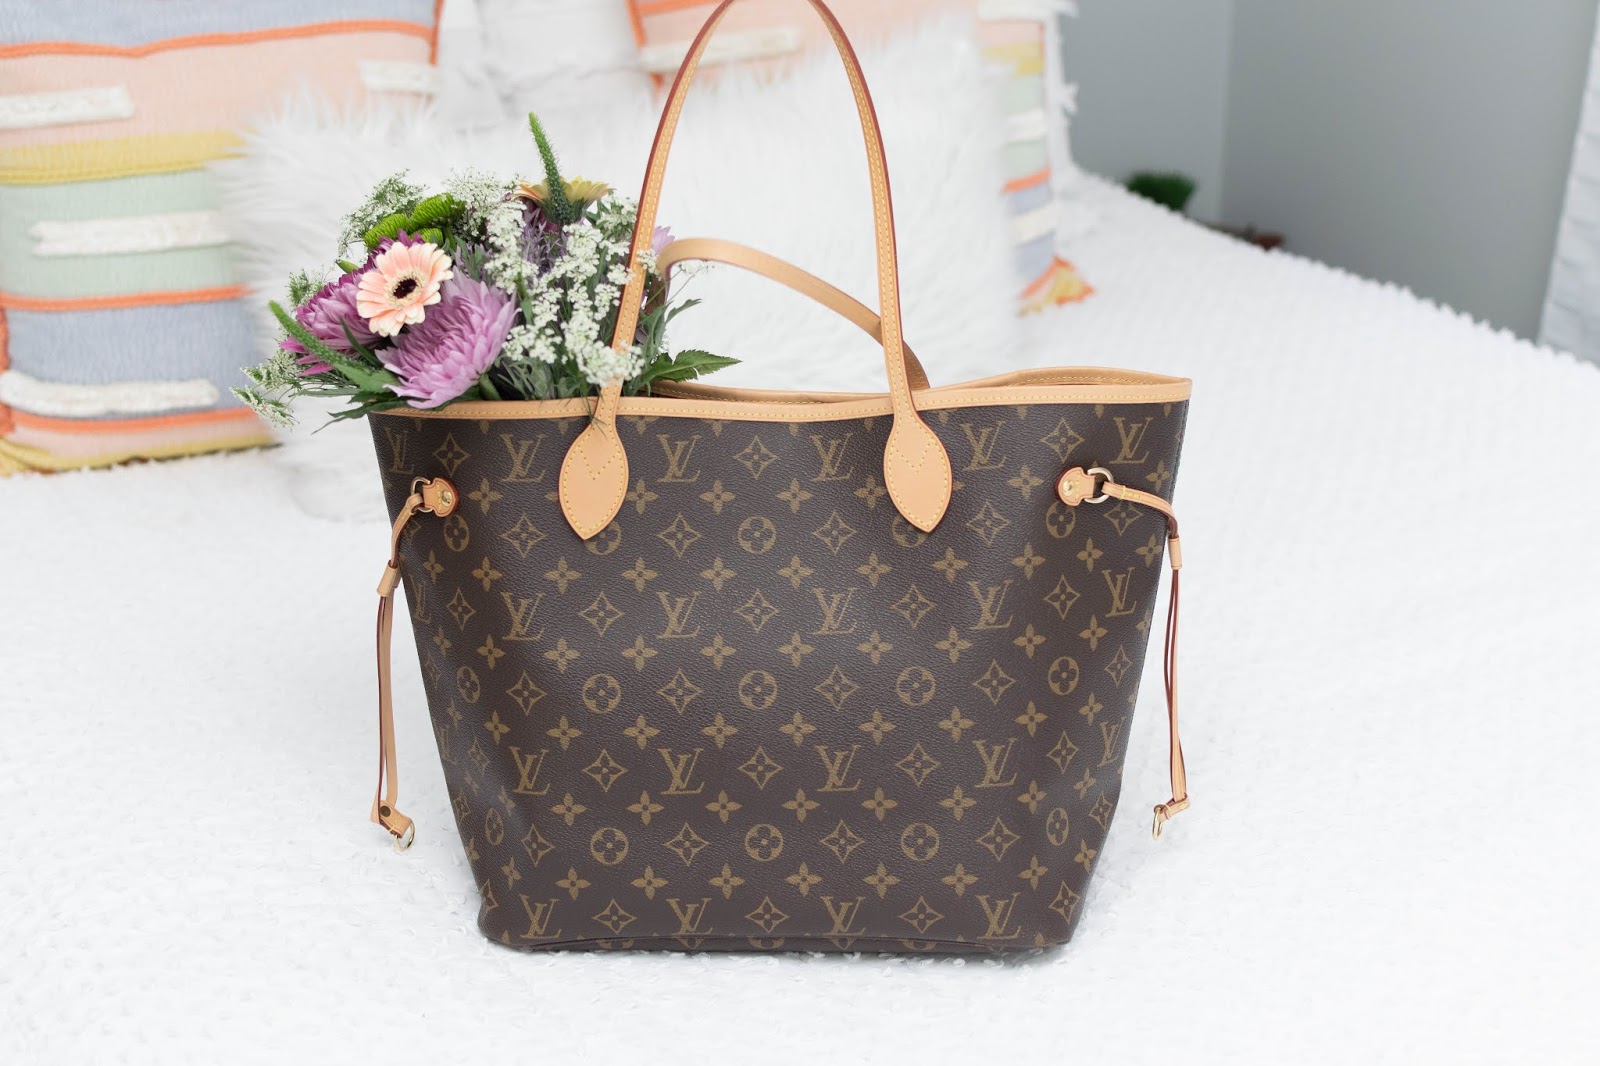 N I C H O L L E S O P H I A: What's In My Bag // Louis Vuitton Neverfull